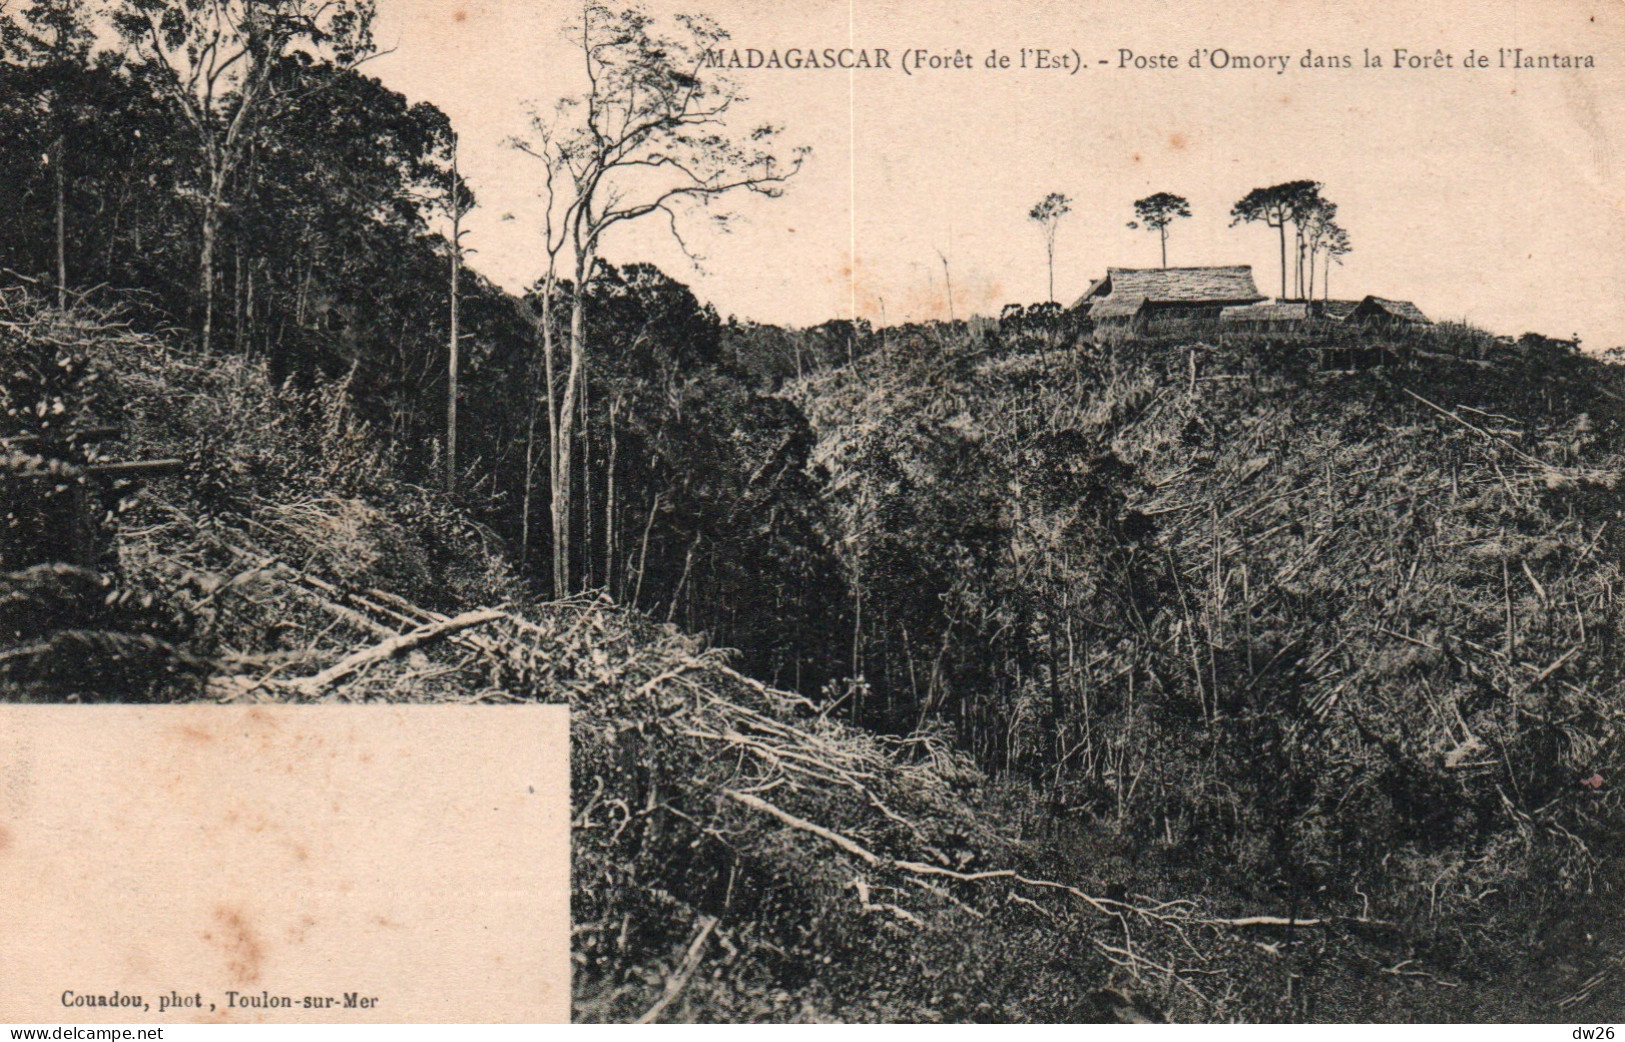 Madagascar (Est) Poste D'Omory Dans La Forêt De L'Iantara - Photo Couadou - Carte Dos Simple Non Circulée - Madagascar